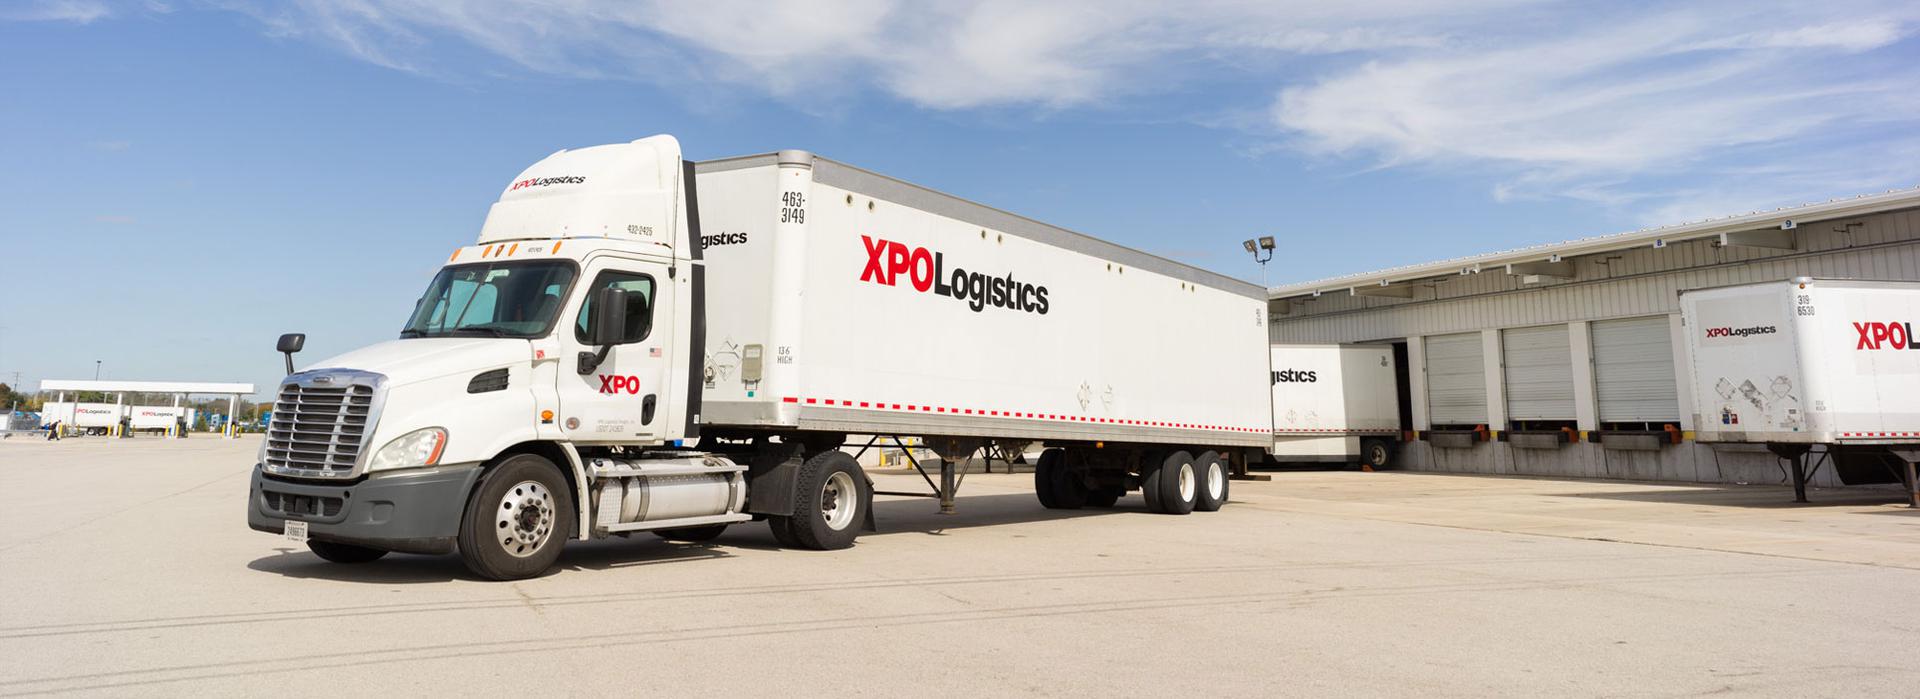 Xpo logistics phone number